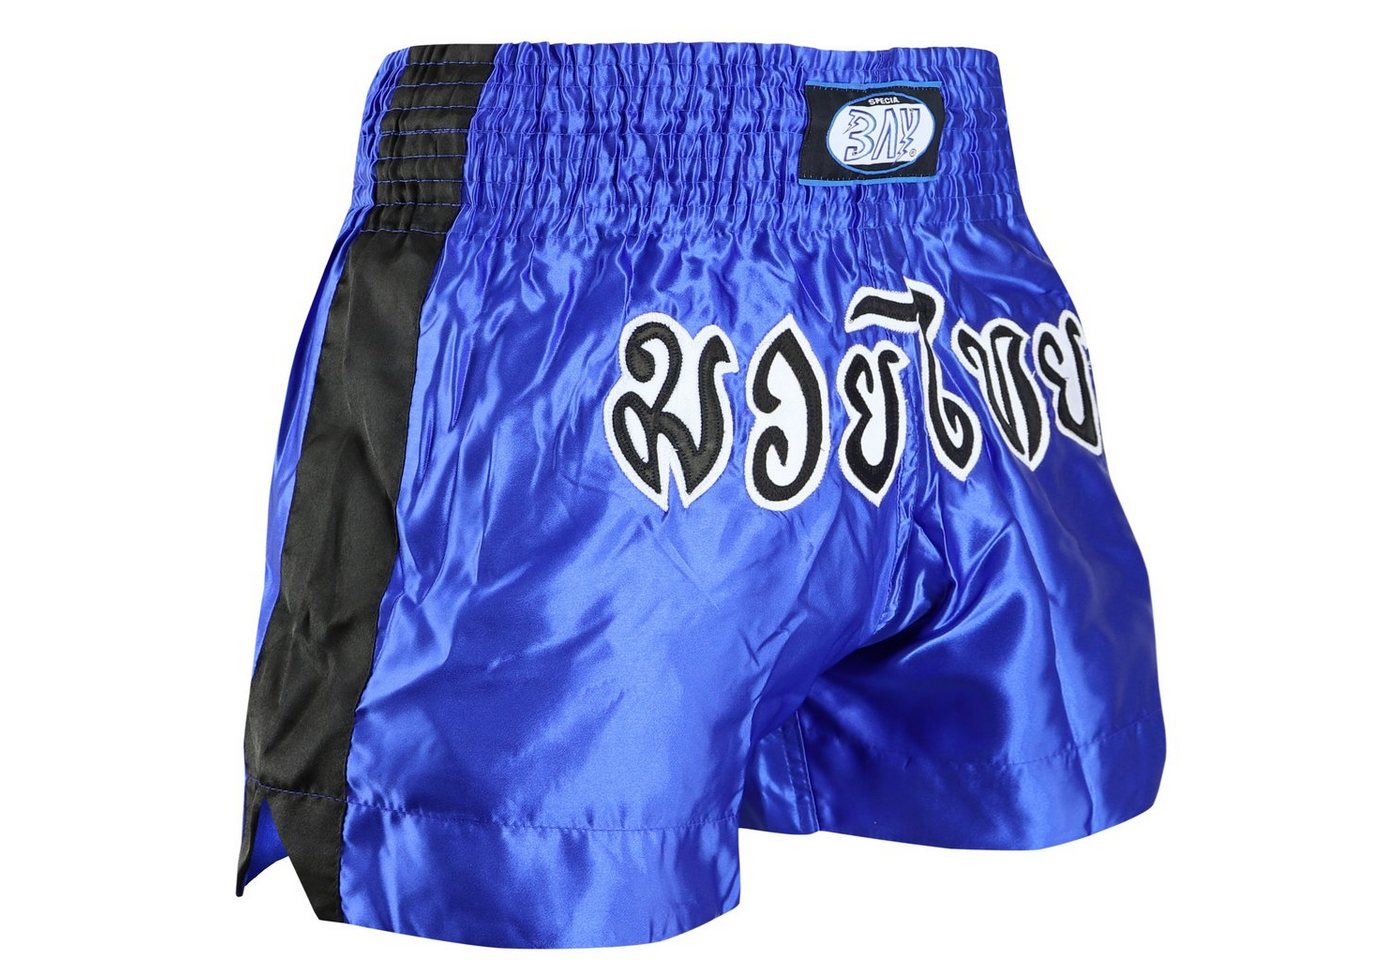 BAY-Sports Sporthose Muay Thai Kick Hose Shorts Thaiboxhose Thaiboxen MMA kurz Kickboxen (kurze Hose, traditionell blau schwarz) kurze Hose, traditionell schwarz weiß von BAY-Sports